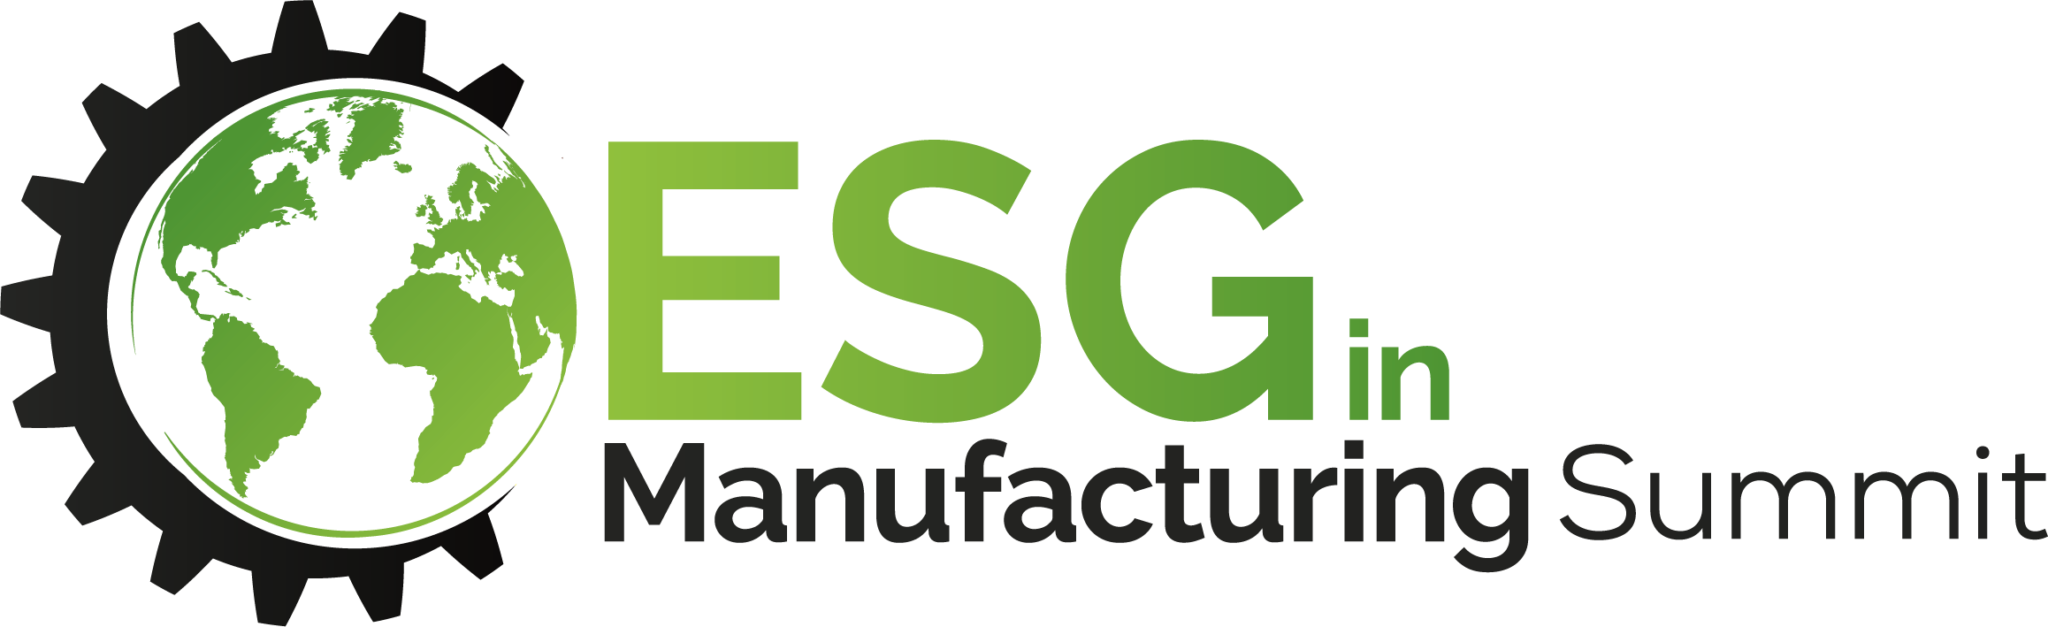 ESG-in-Manufacturing-Summit-Logo-COL-2048x627